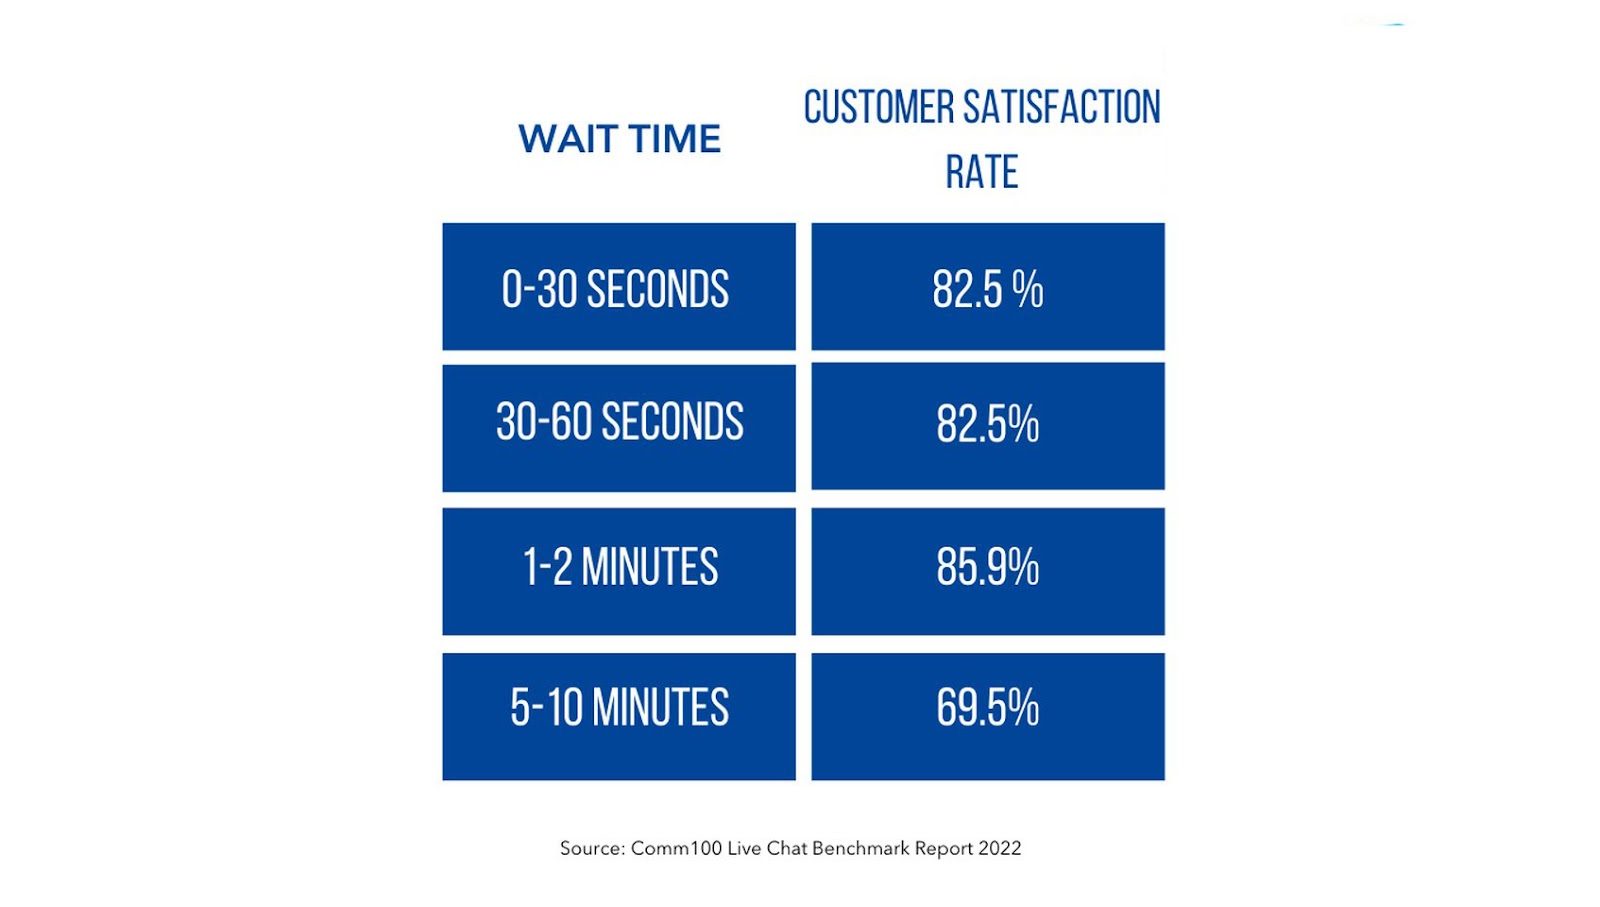 Customer Satisfaction rate